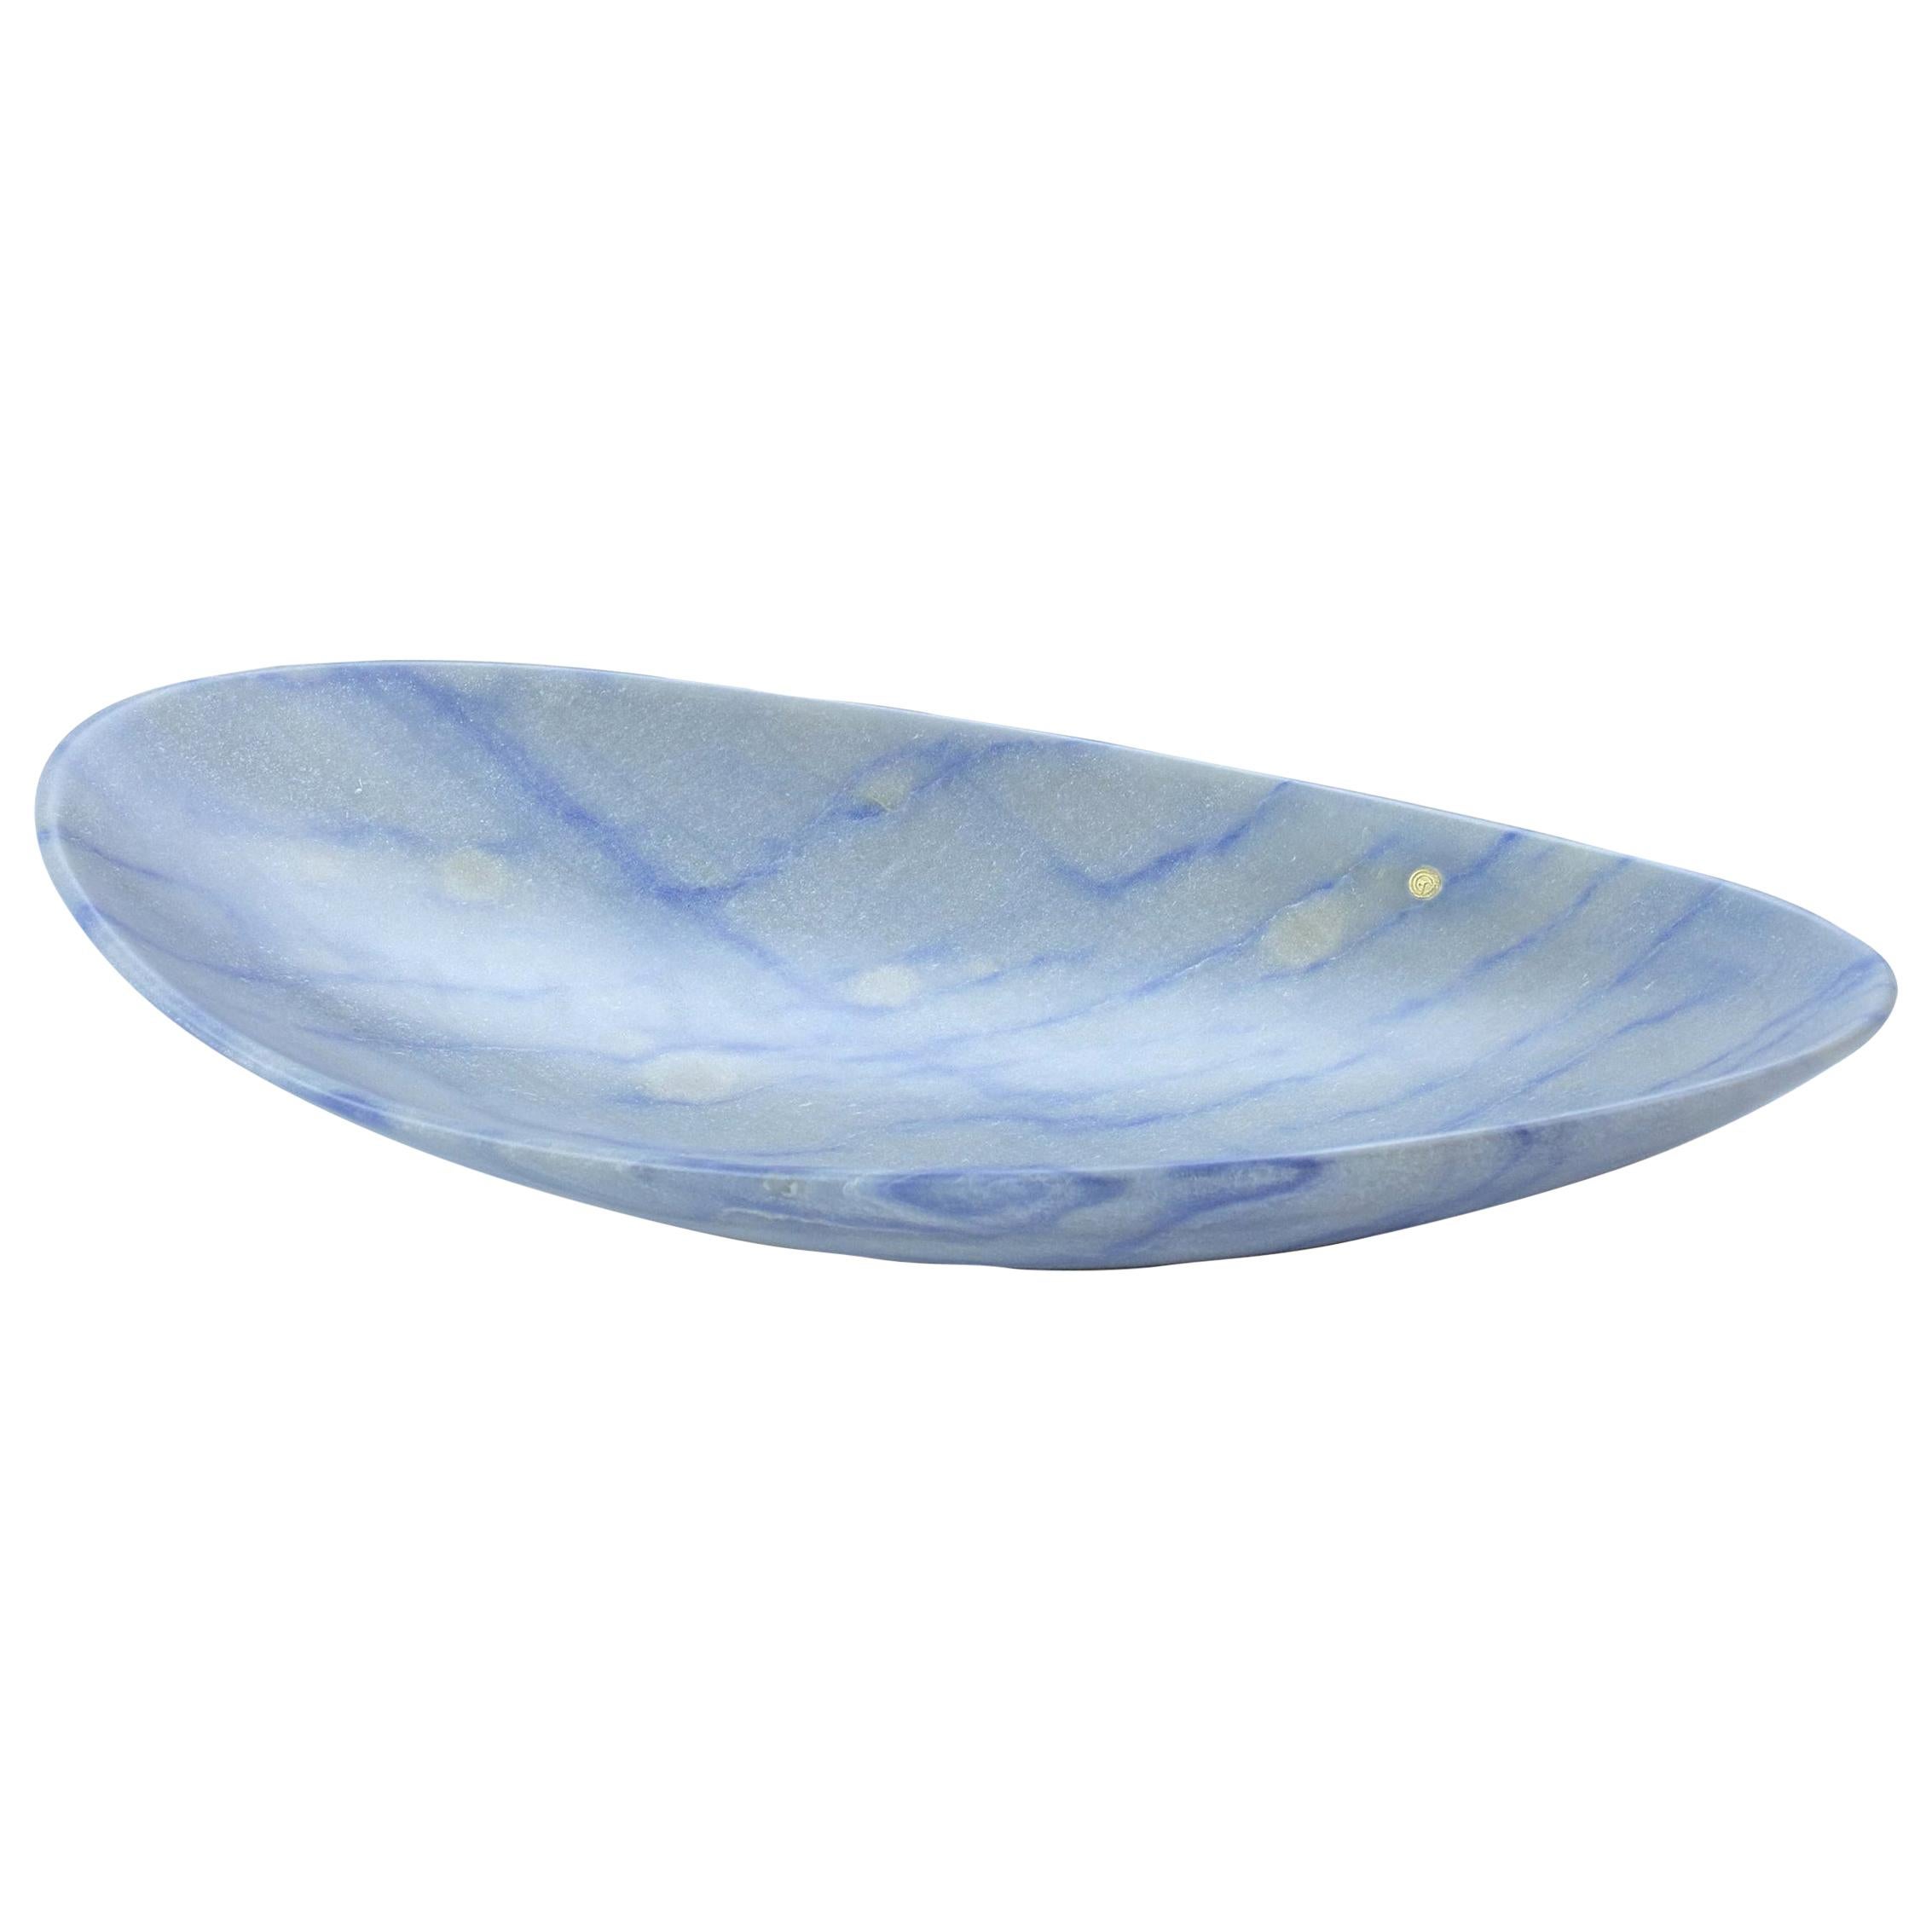 Decorative Bowl Centerpiece Vessel Blue Azul Macaubas Marble Hand-Carved Italy For Sale